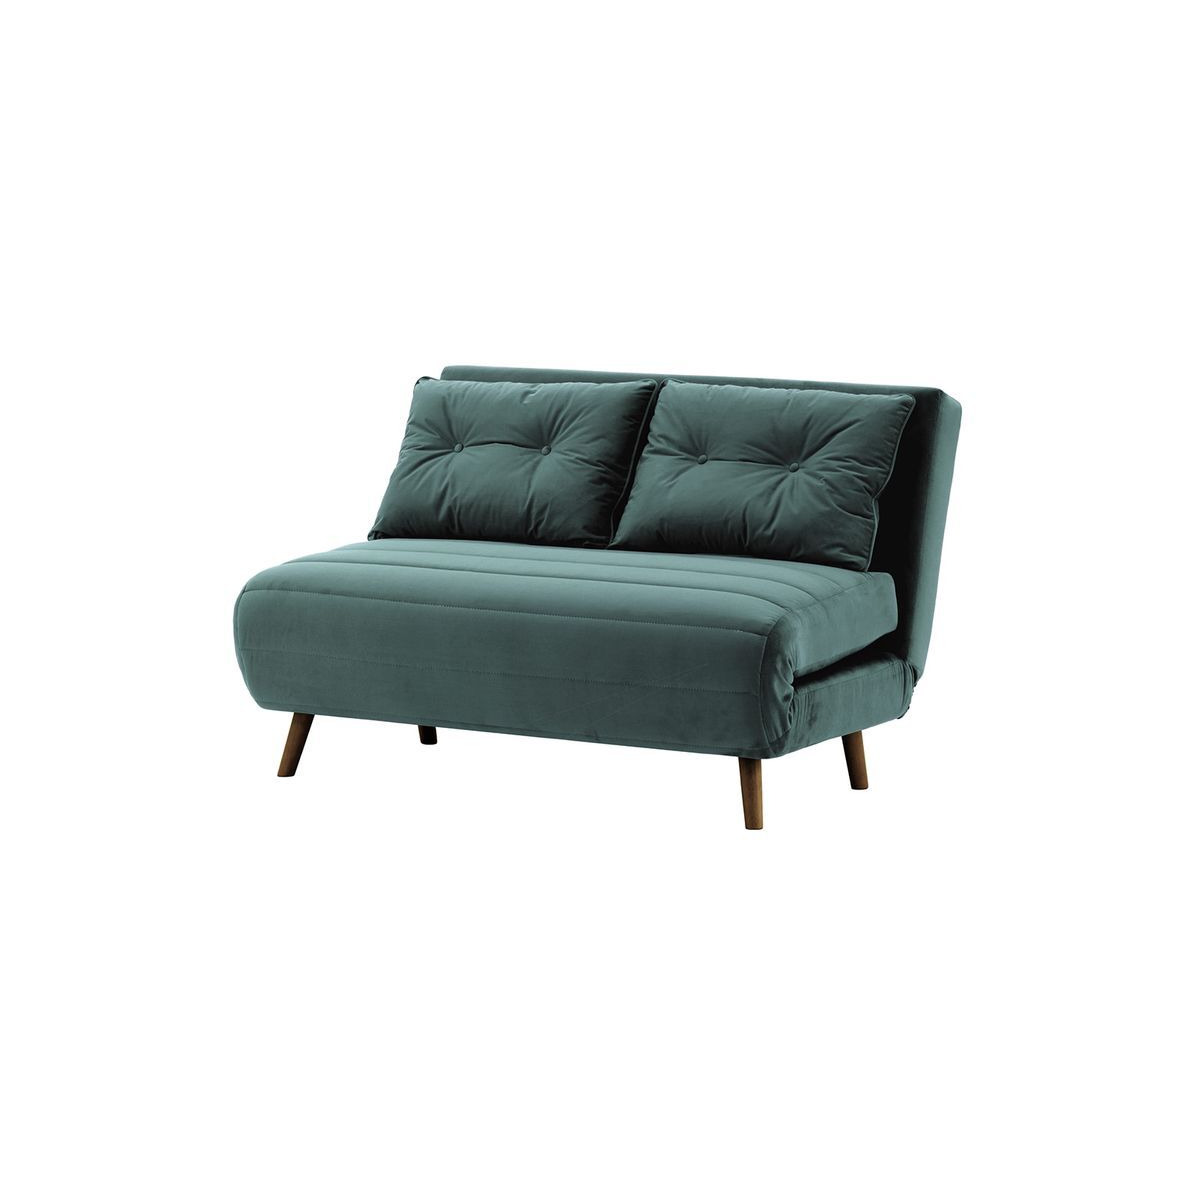 Flic Double Sofa Bed - width 120 cm, dirty blue, Leg colour: dark oak - image 1